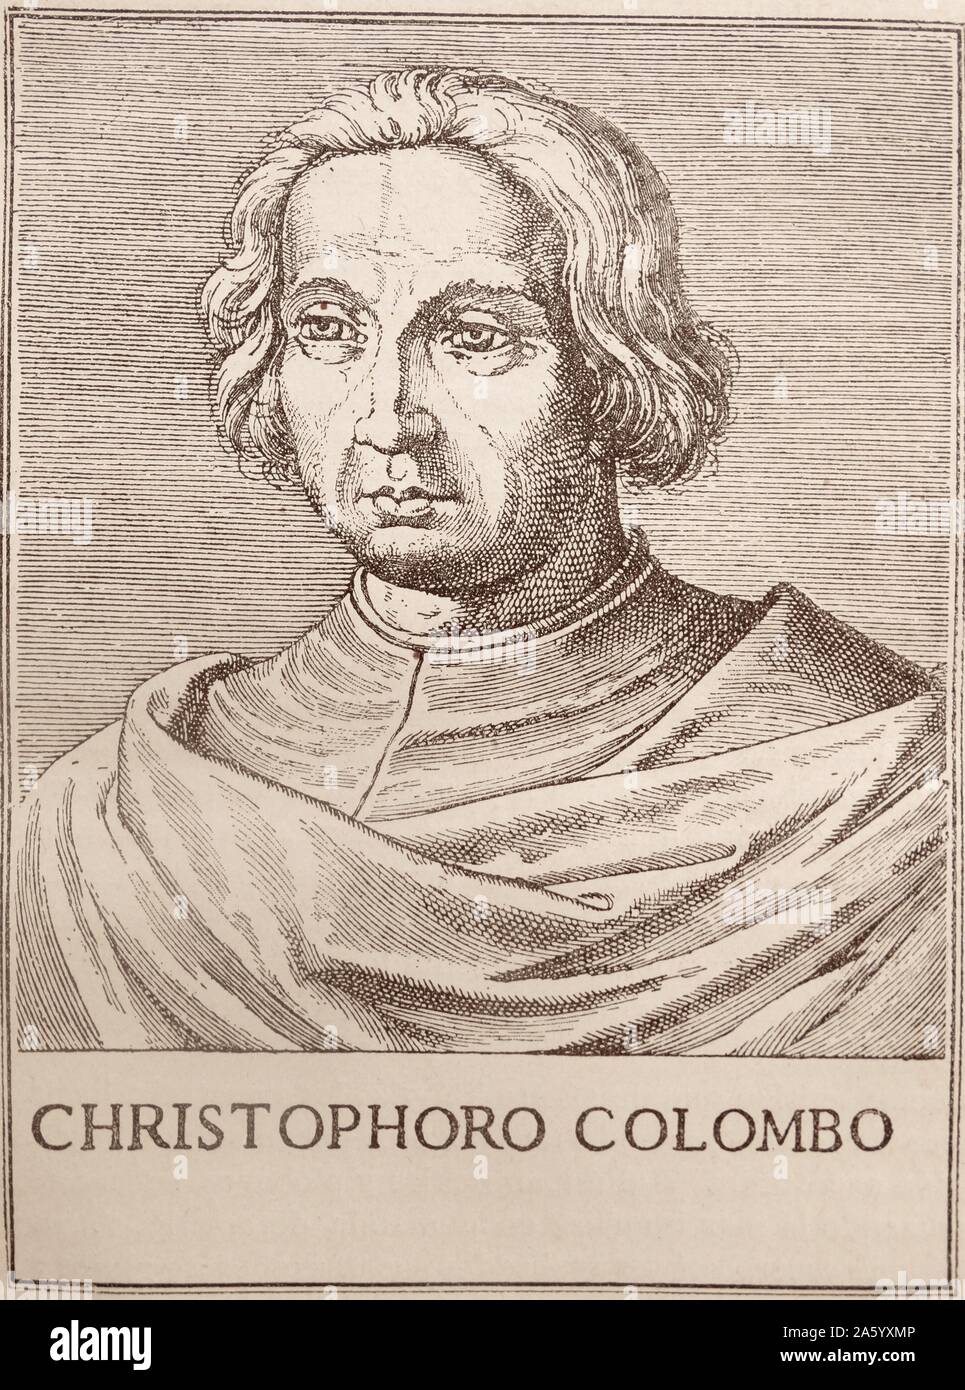 Christopher Columbus; Holzschnitt-Illustration aus einem spanischen Buch 16. Jahrhundert Stockfoto